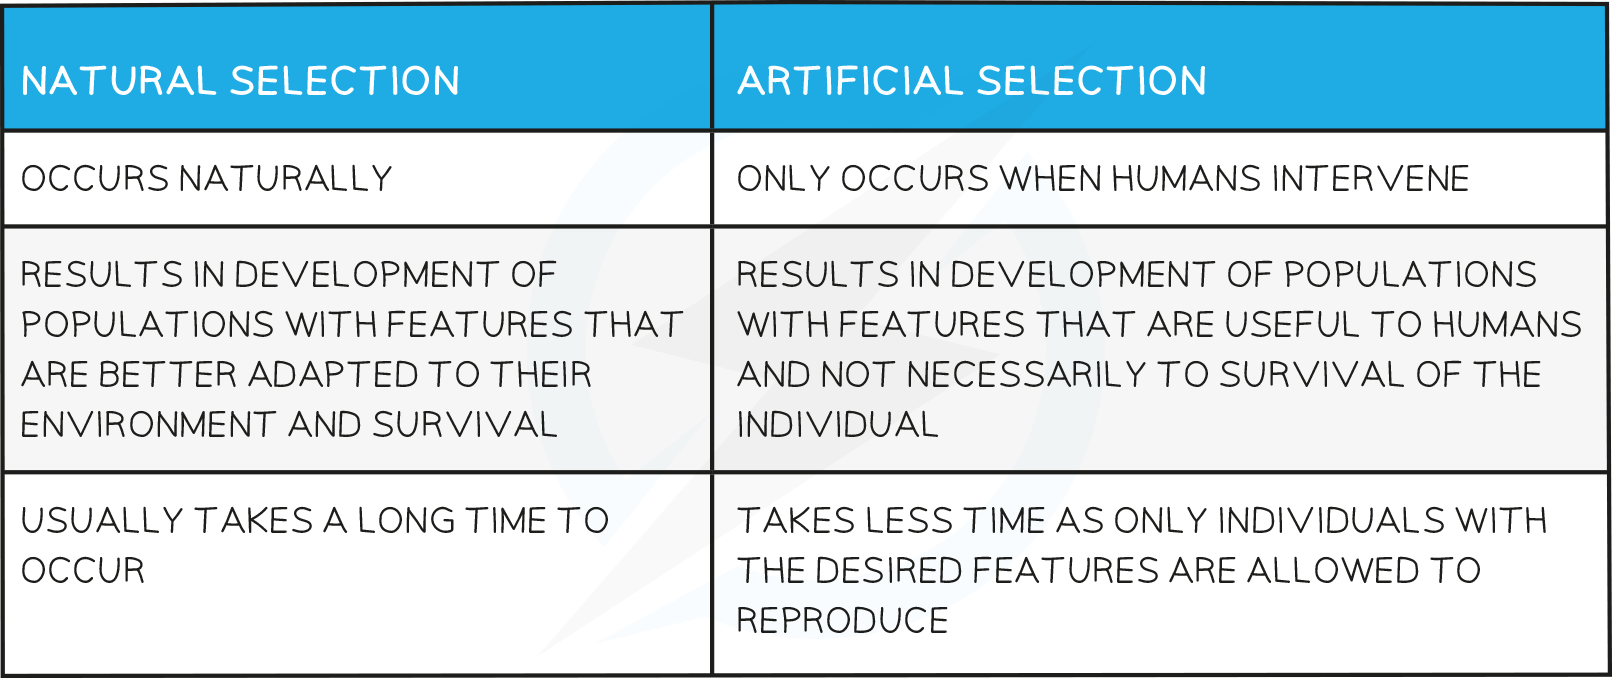 18.5-Natural-vs-Artificial-Selection-table